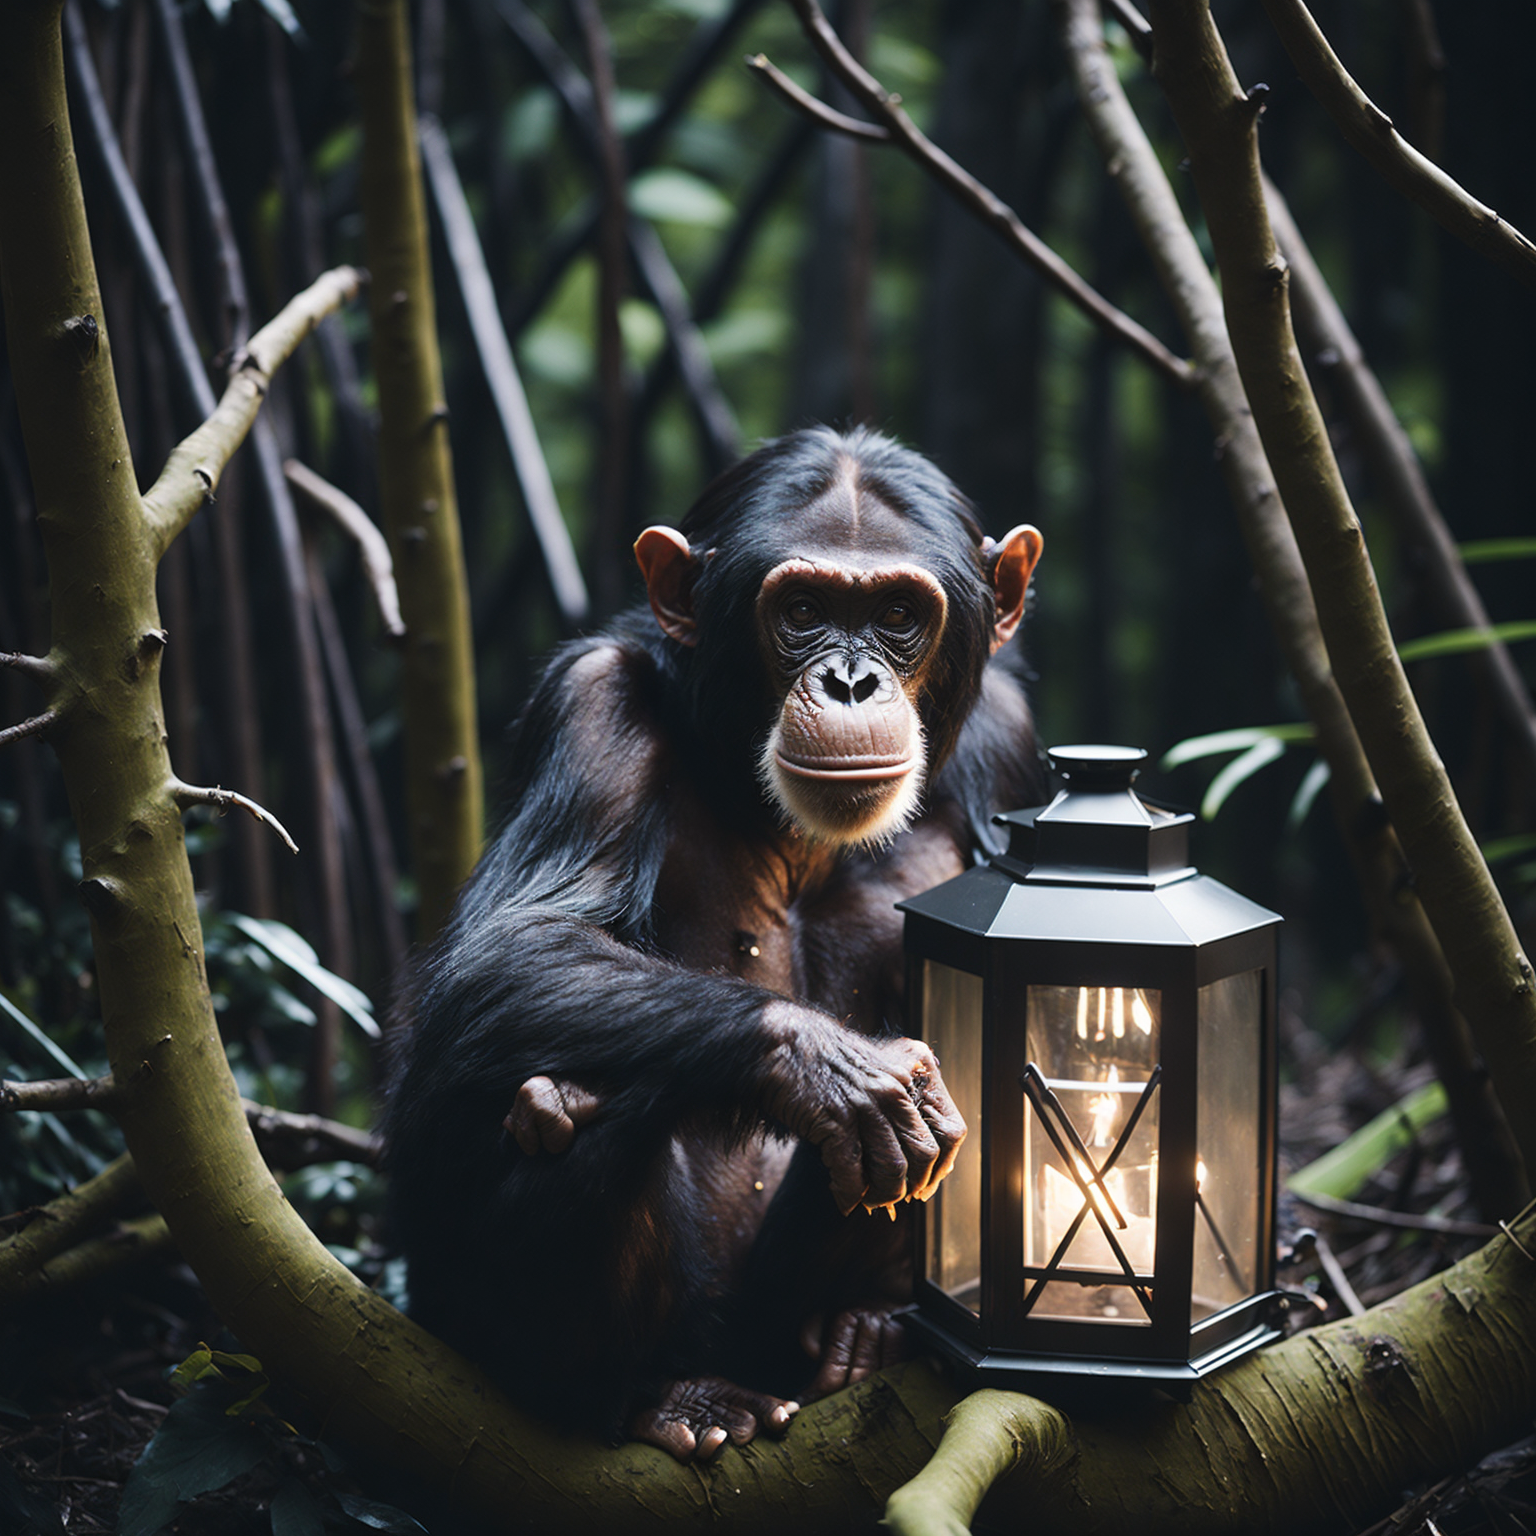 Chimpanzee in Thorn forest Romantic atmosphere Lantern lighting